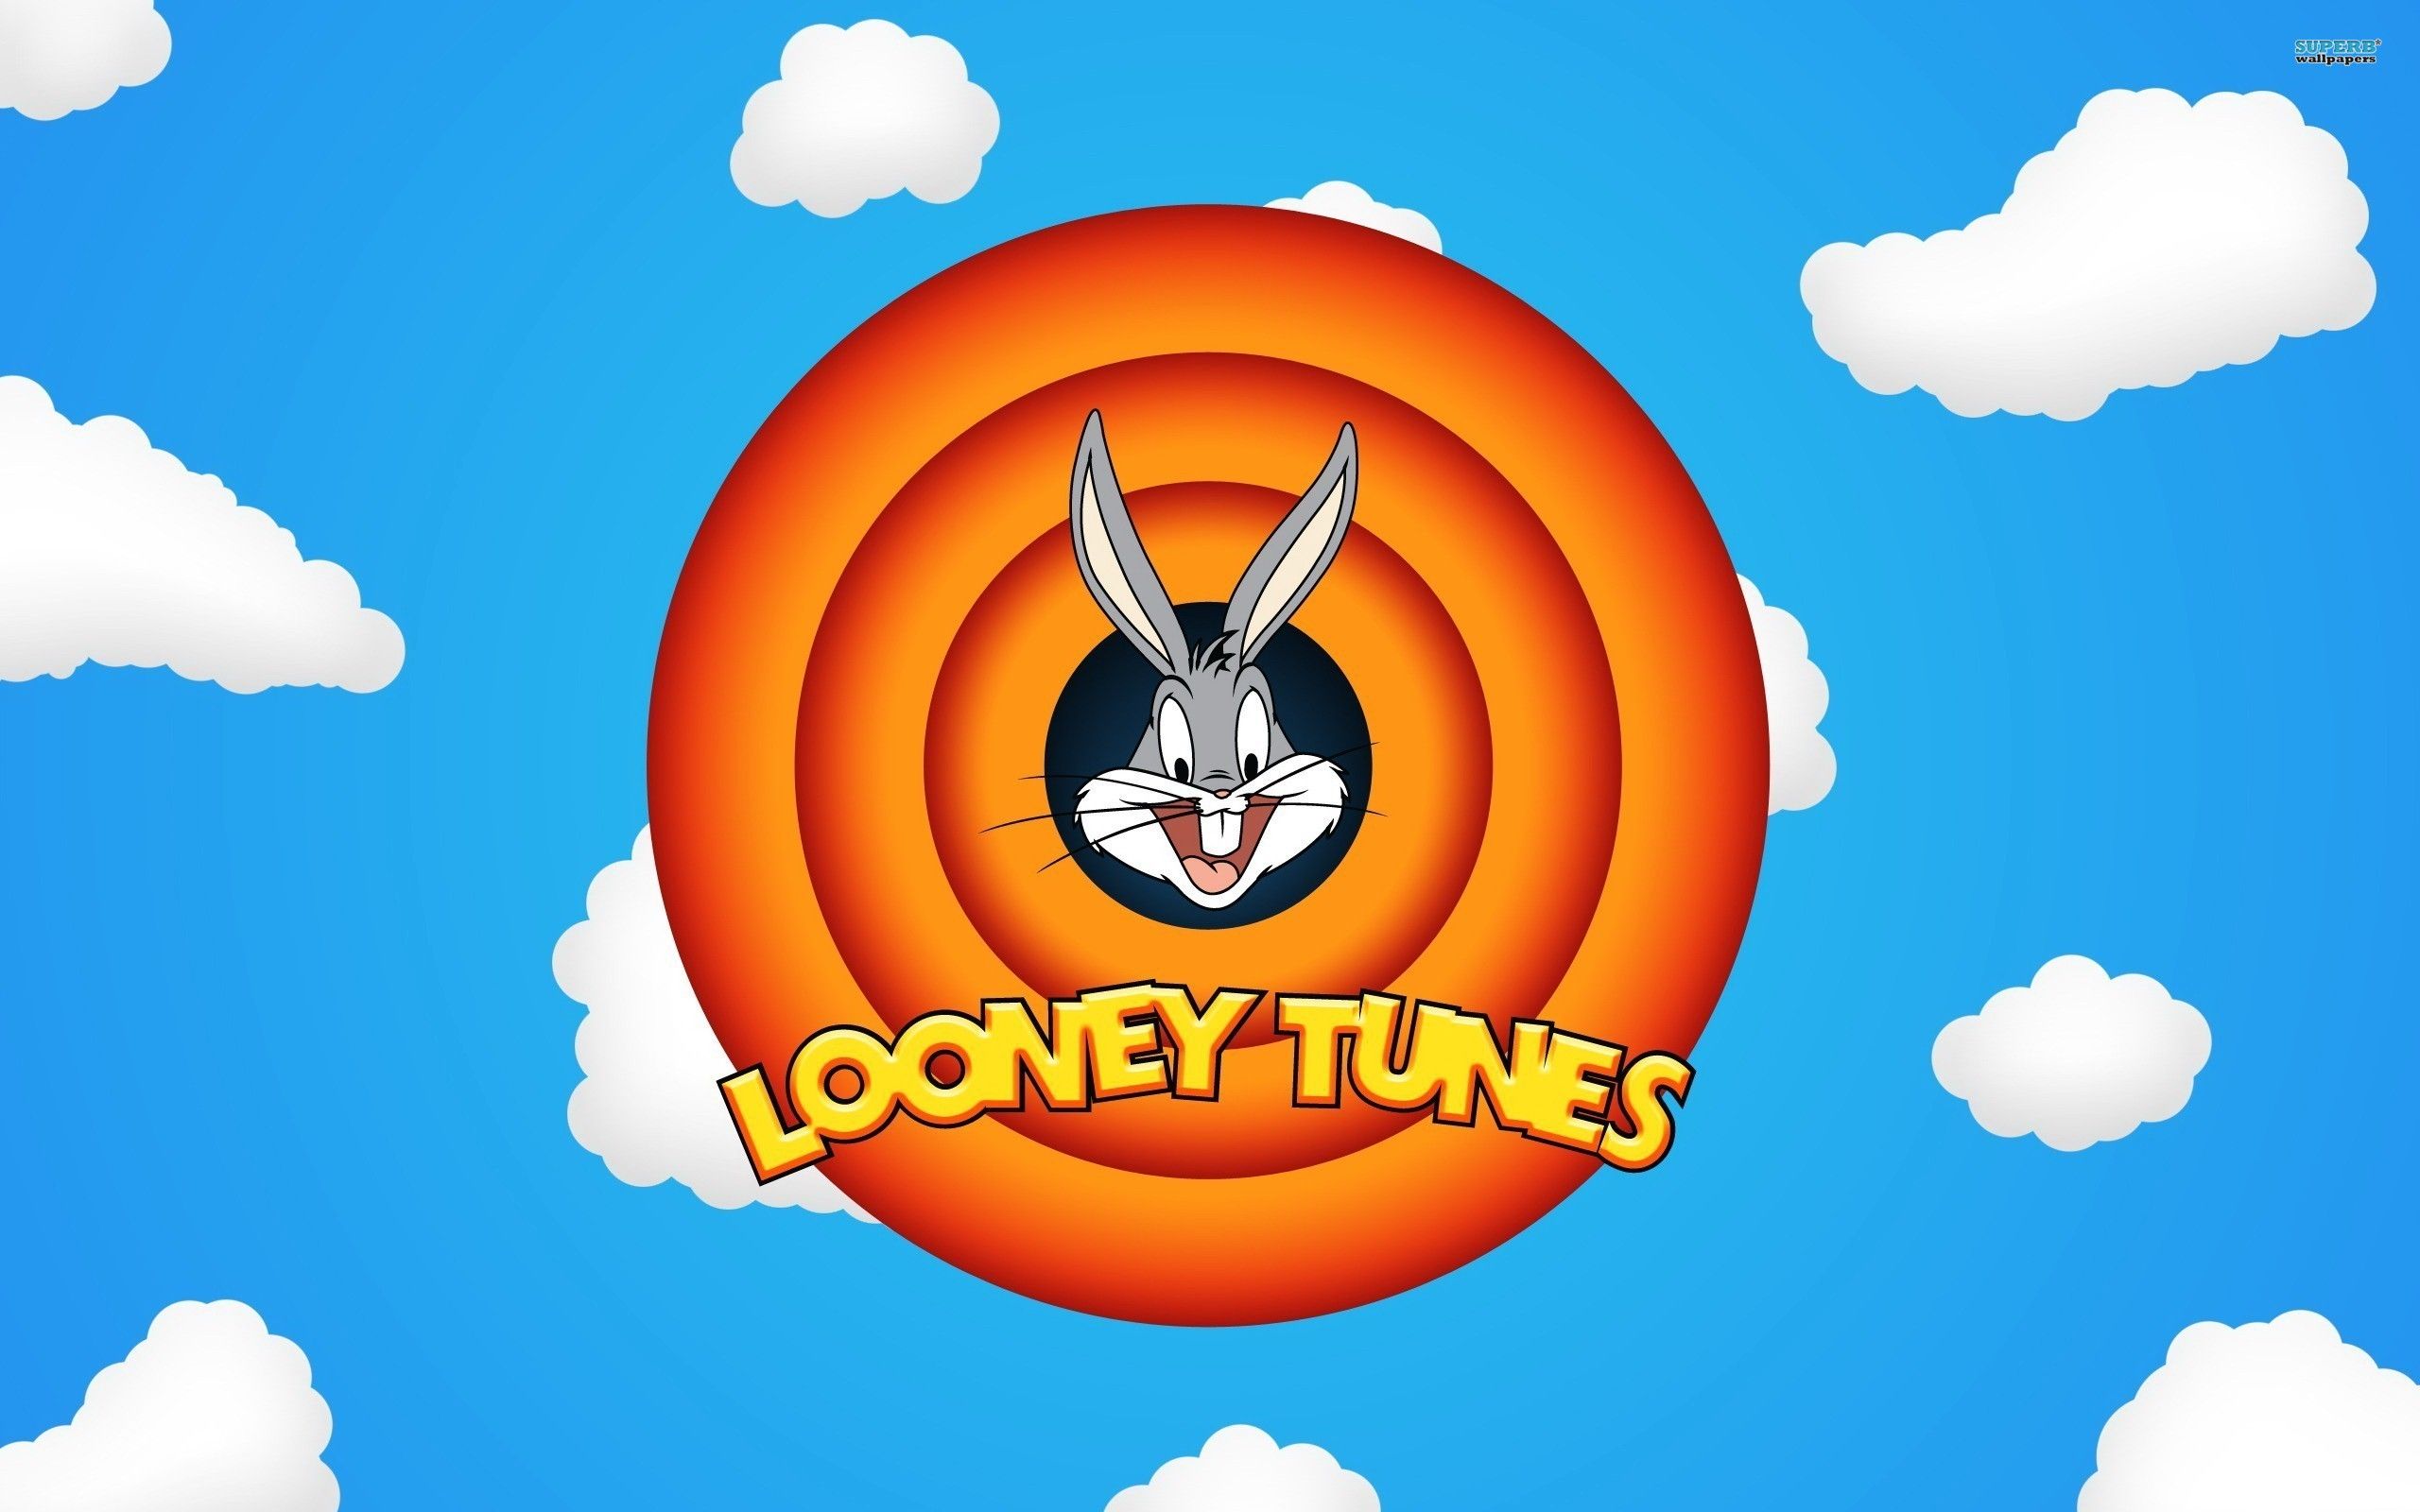 Bugs Bunny - Looney Tunes wallpaper - Cartoon wallpapers - #9523